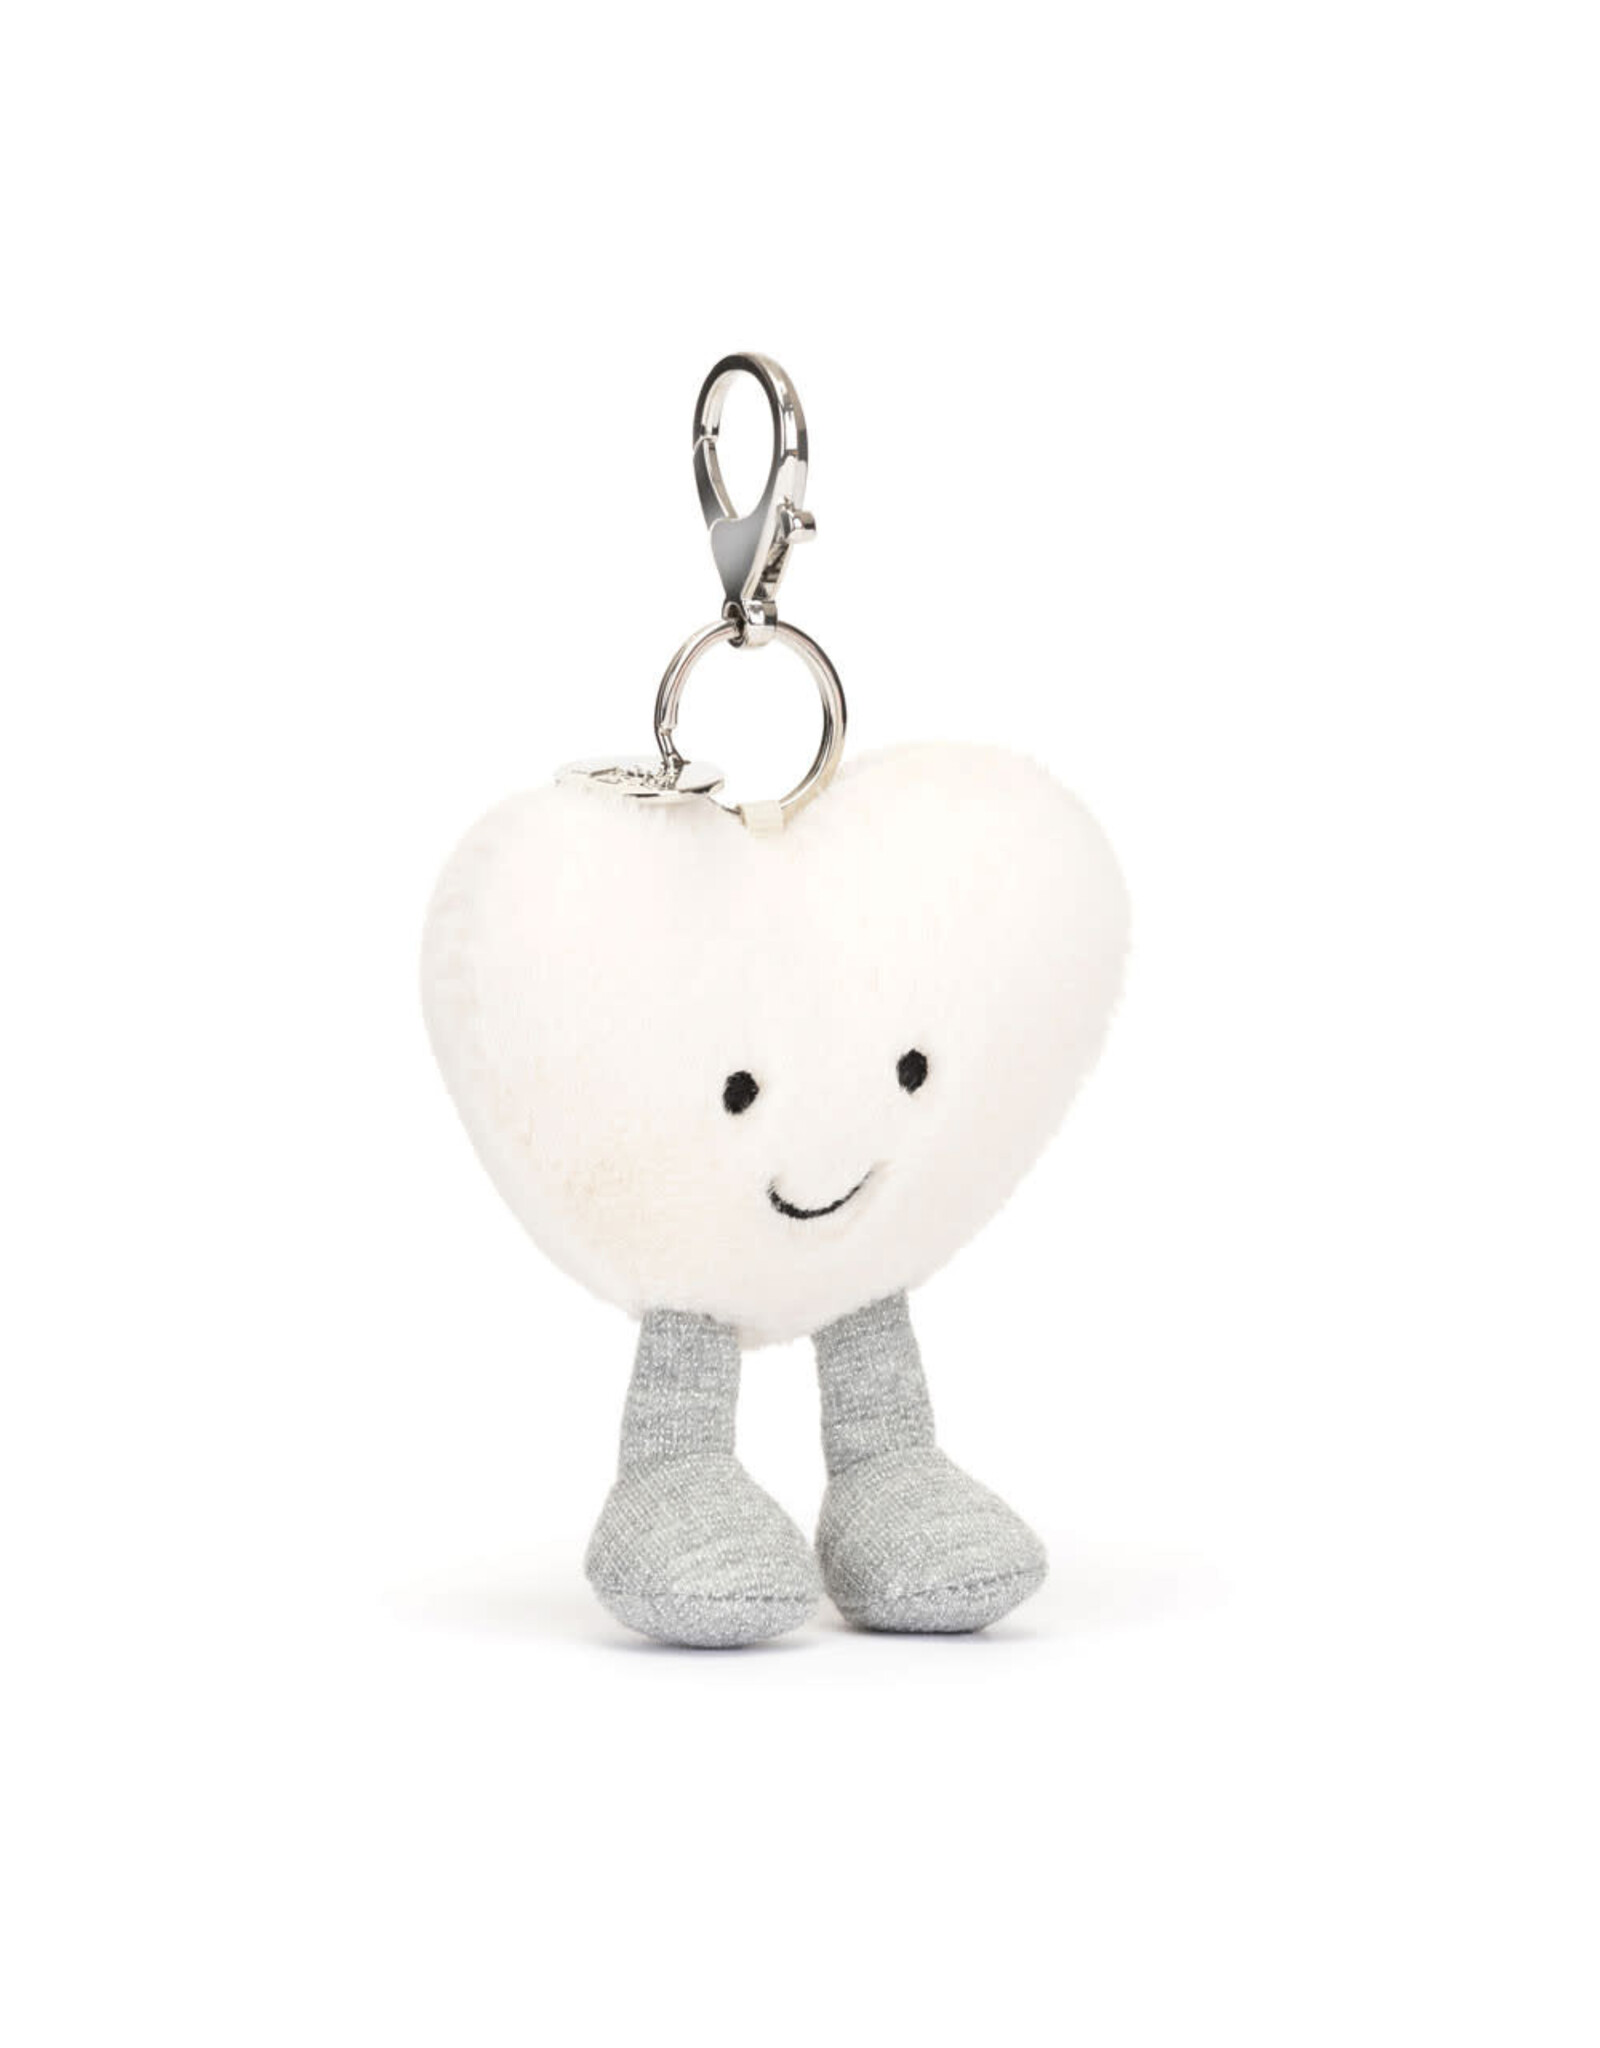 Jellycat Bag Charm - Amuseable - Cream Heart